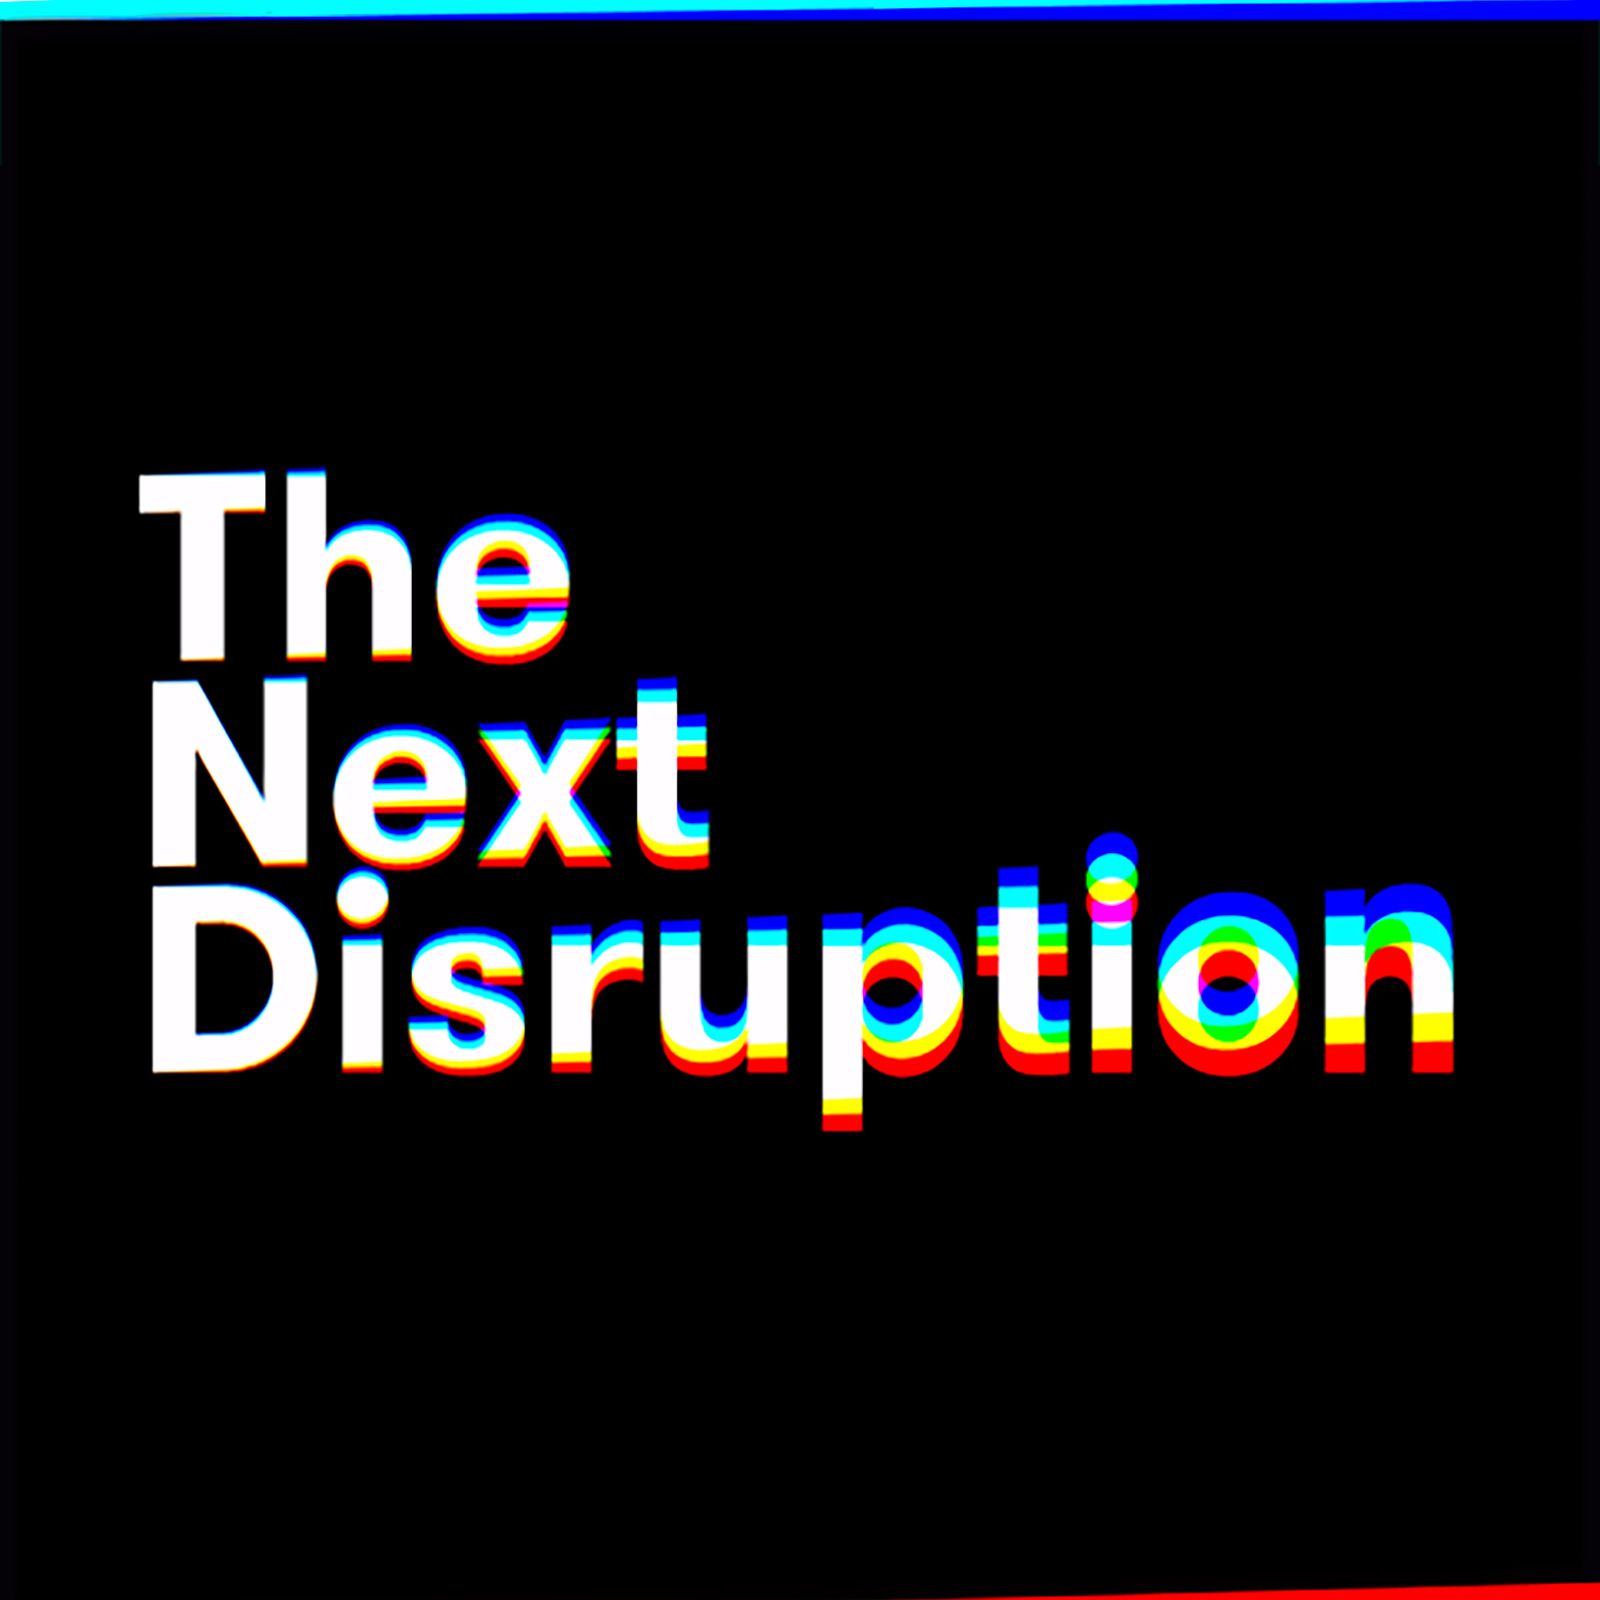 Next Disruption